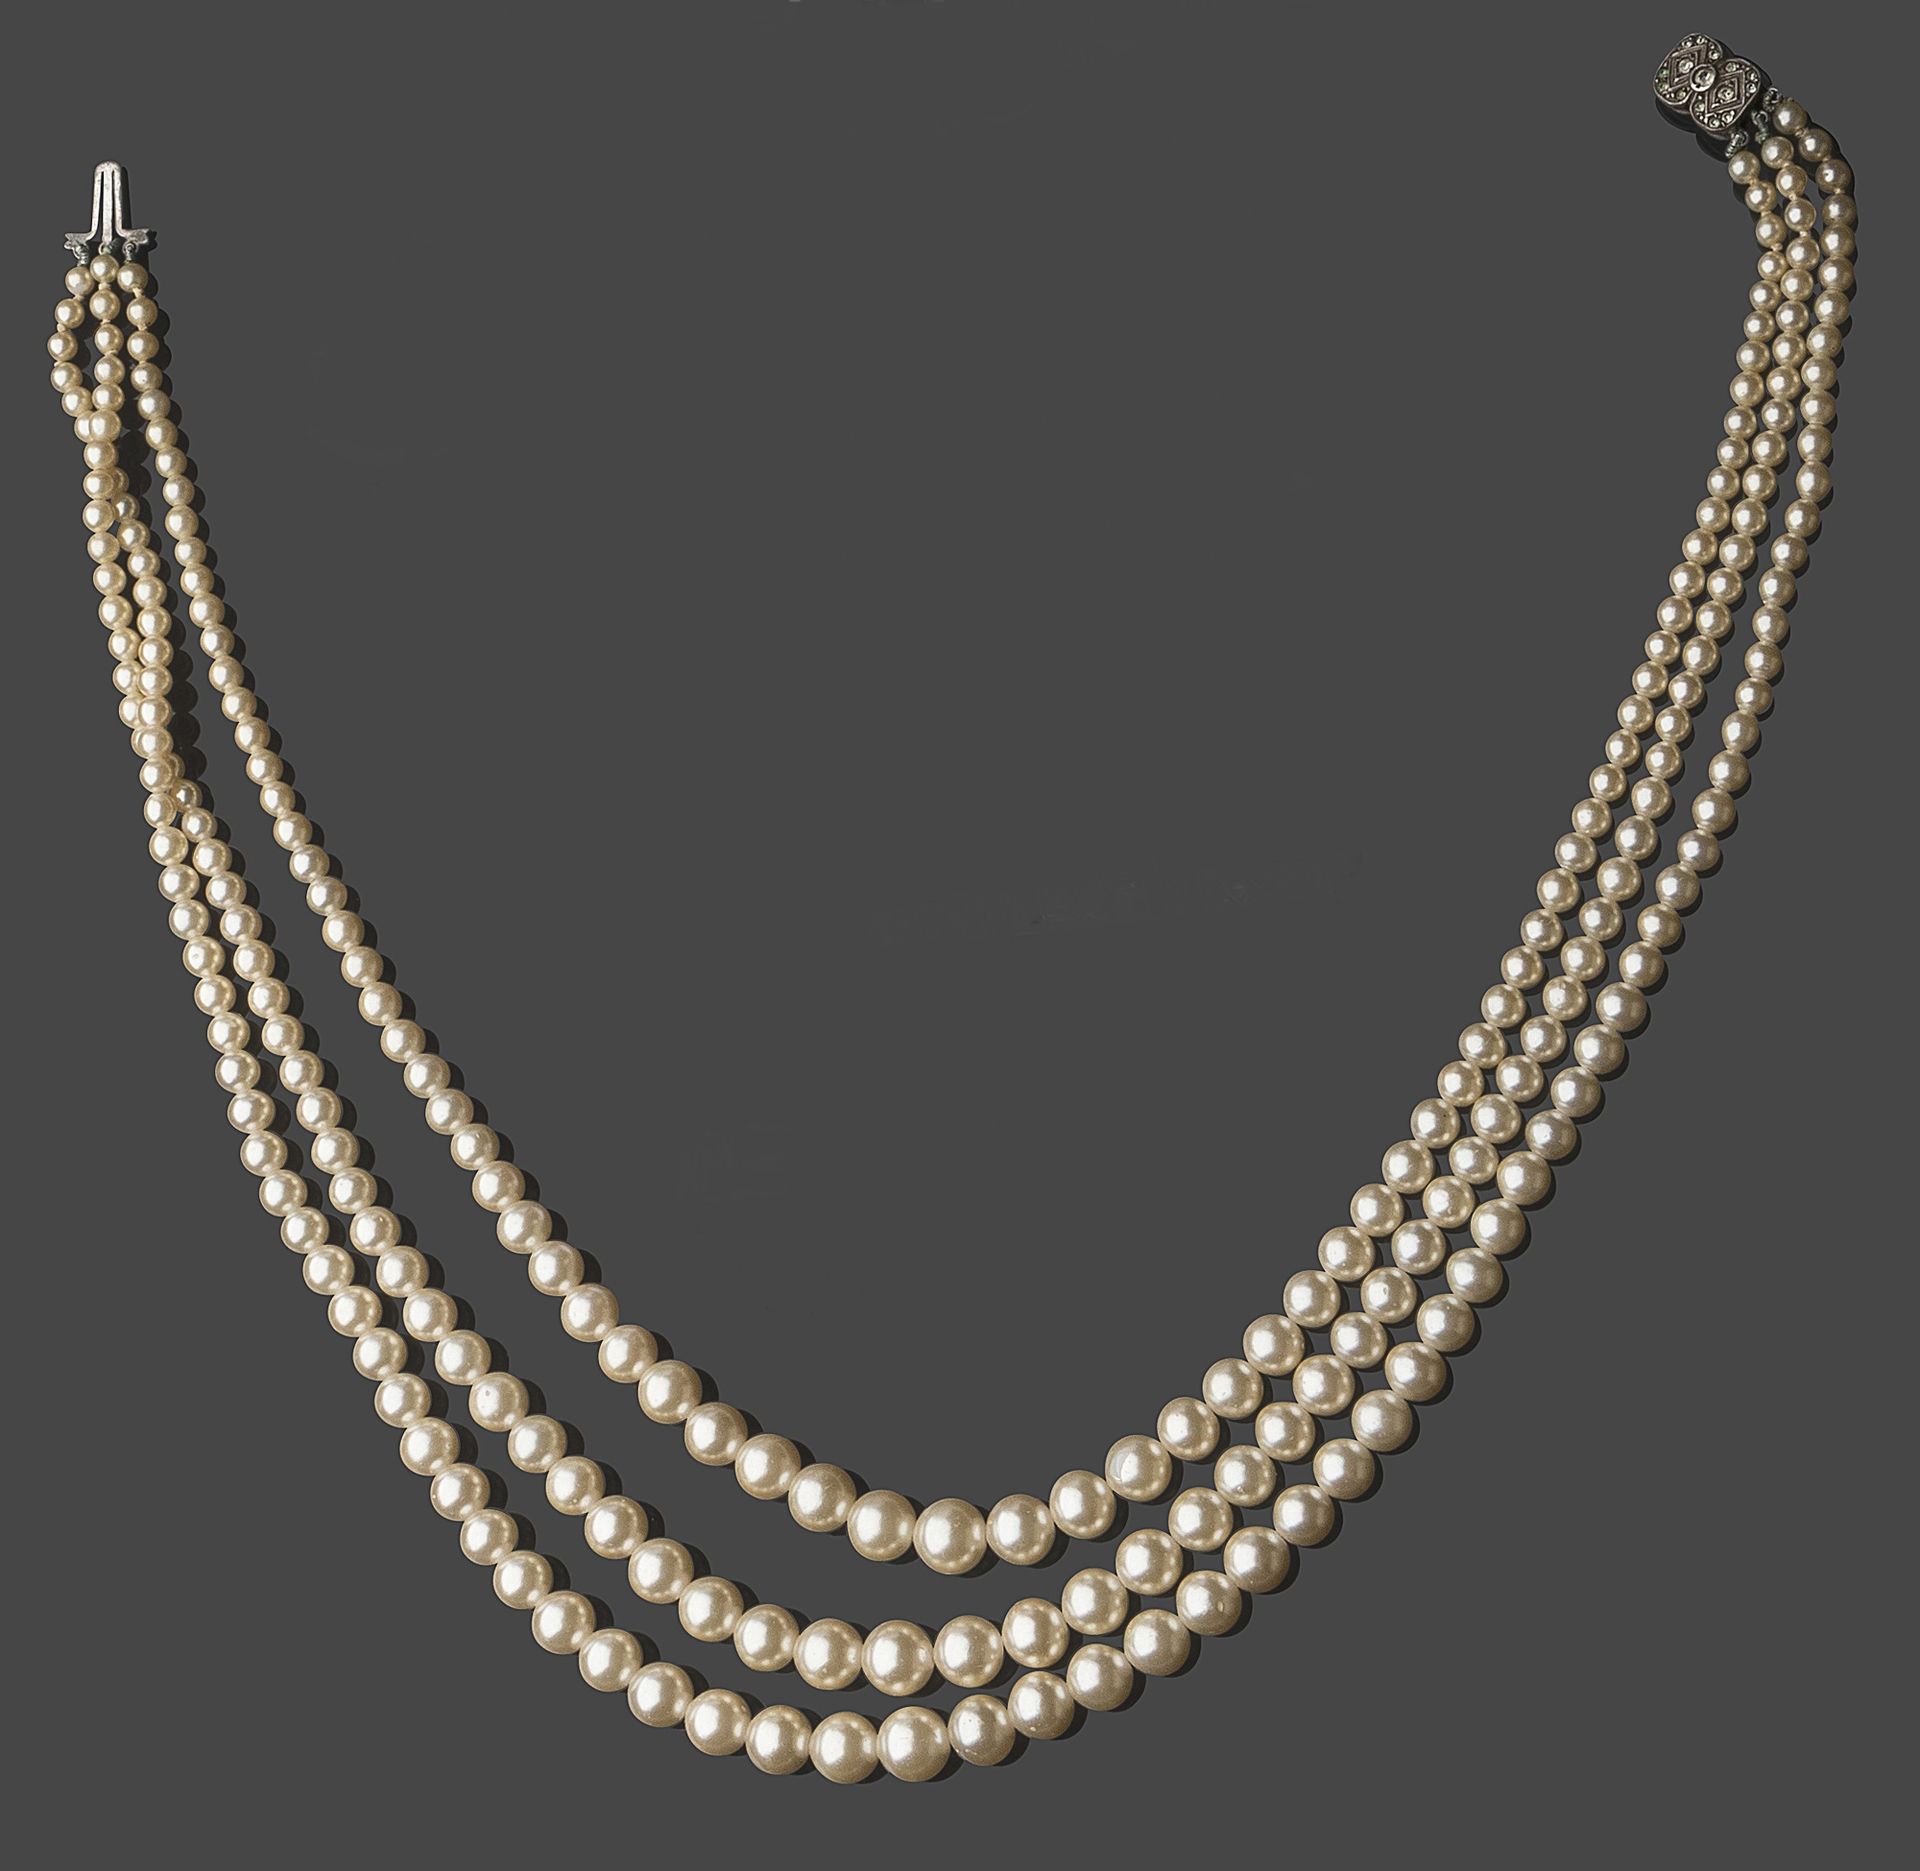 Null 三排仿珍珠项链，银制（925）扣子
长度：43厘米